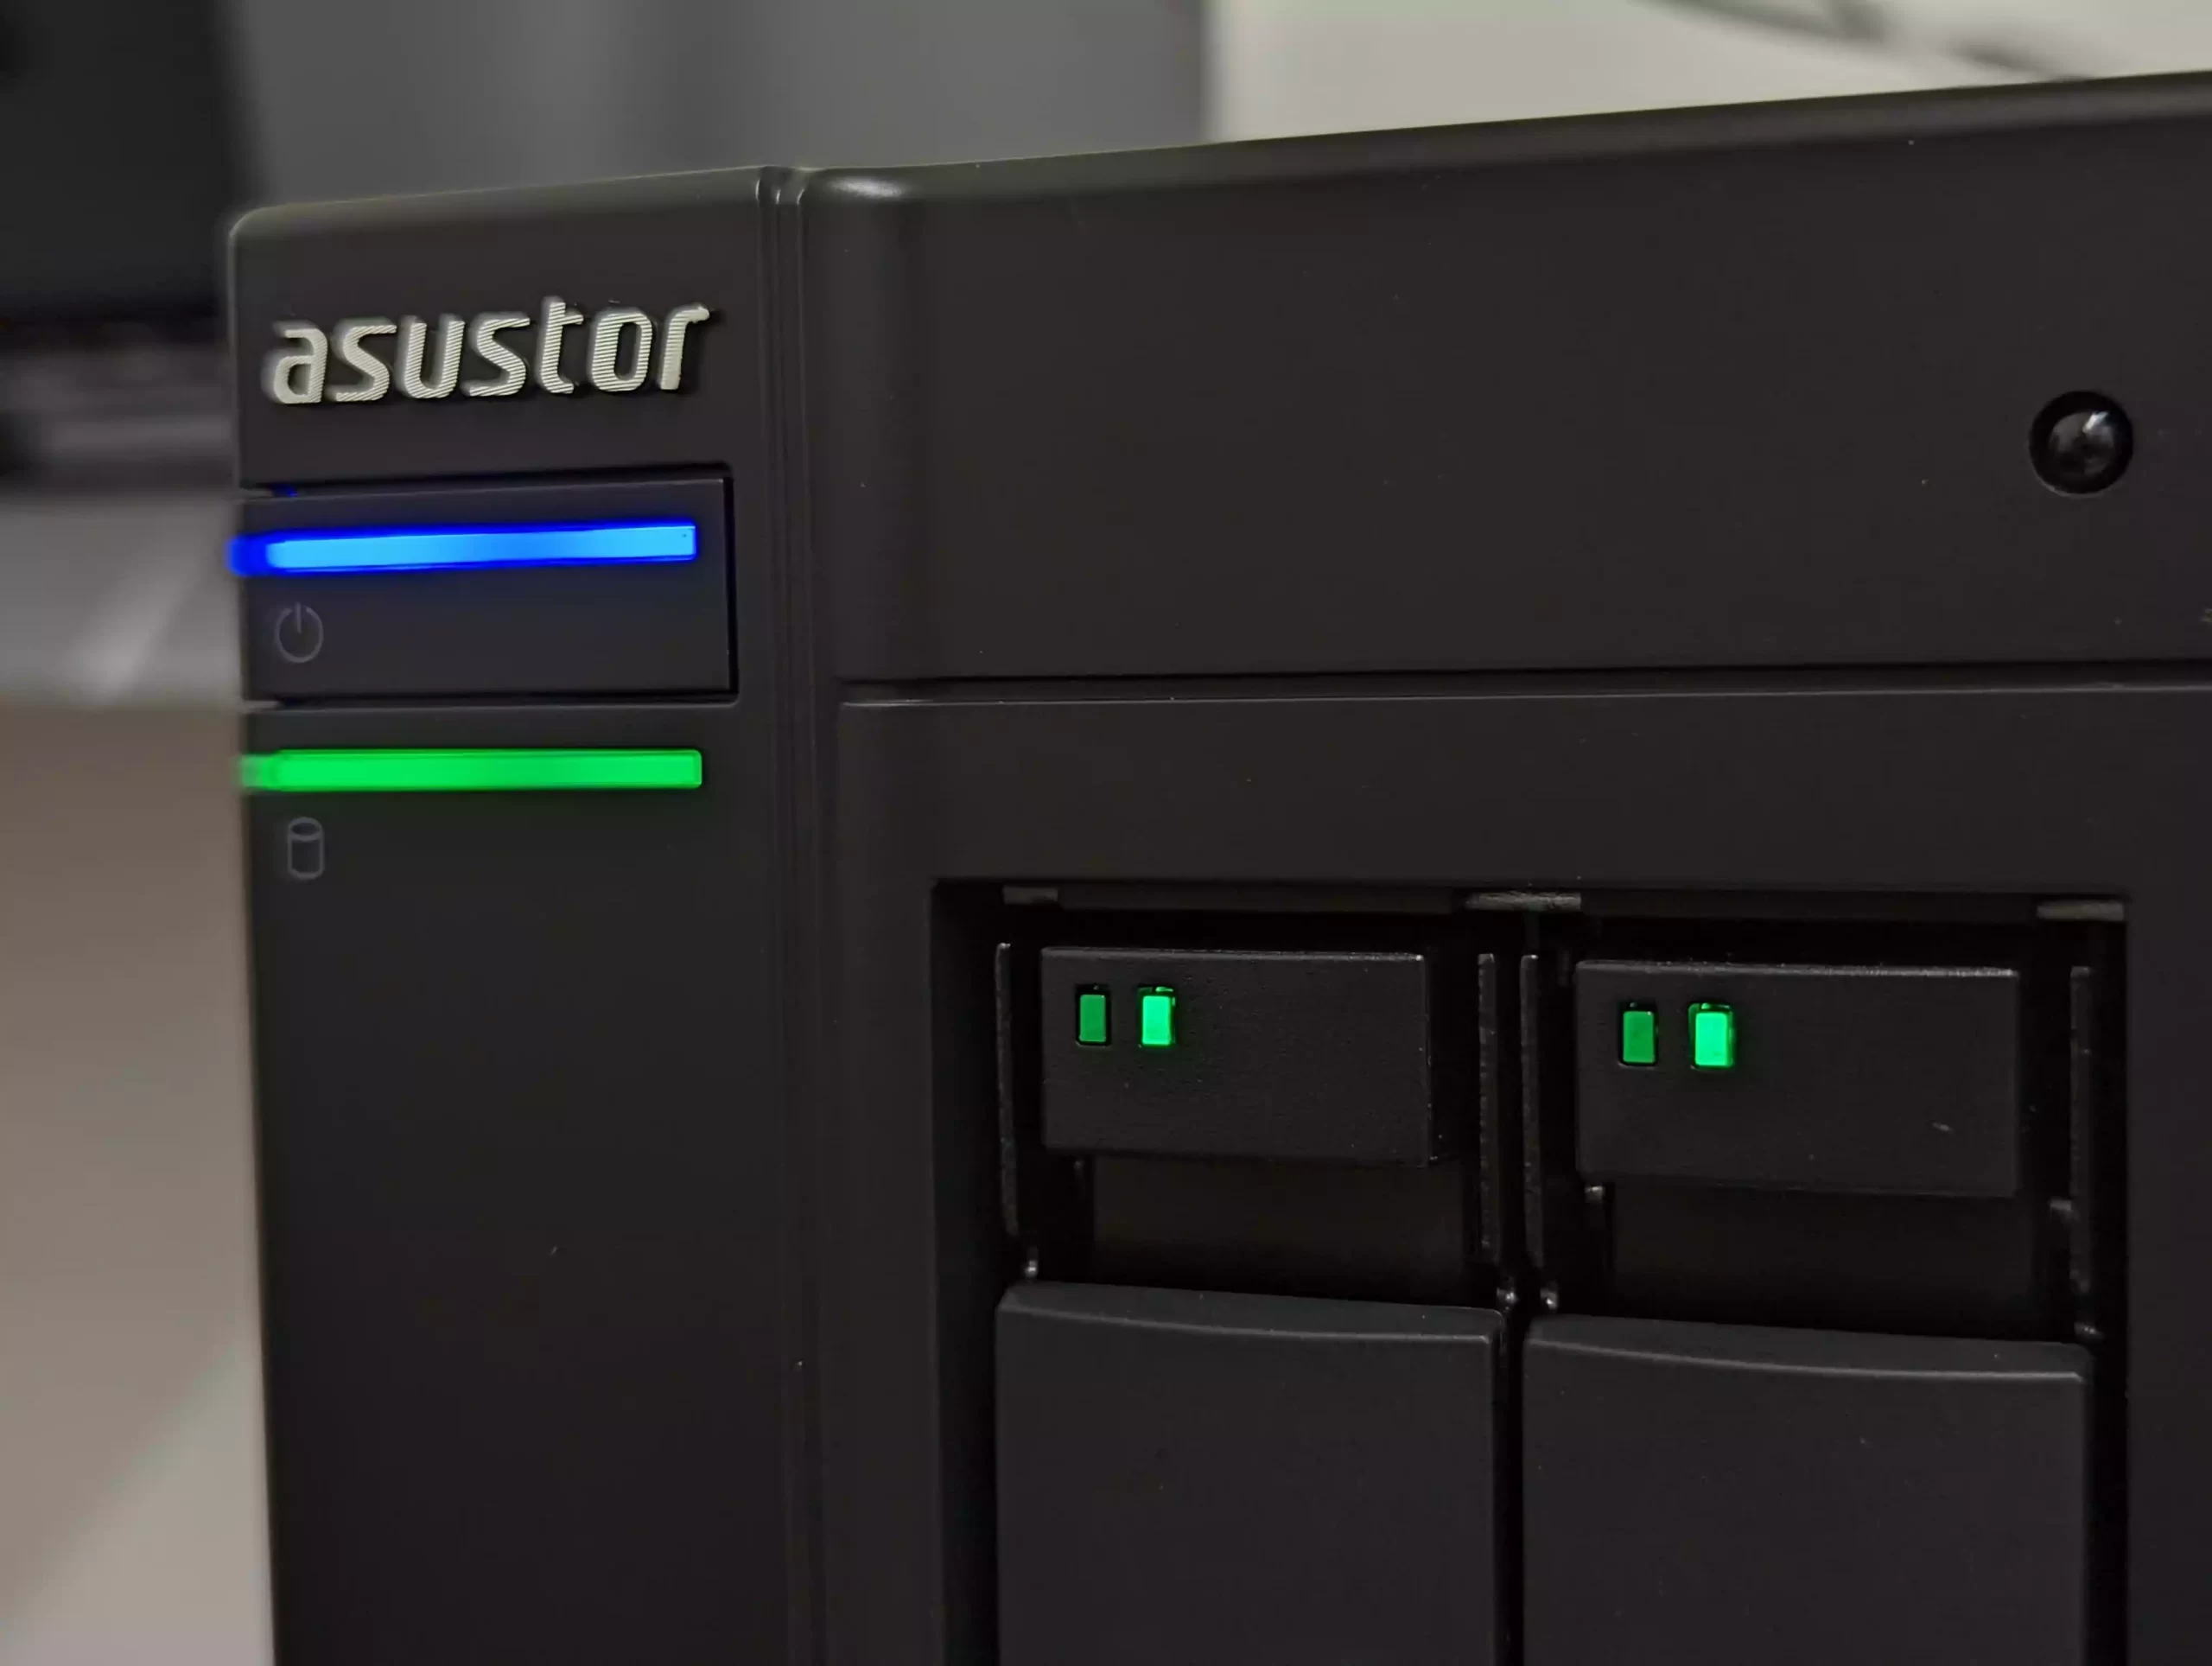 Asustor Lockerstor Gen 2 4K Plex NAS Tests 